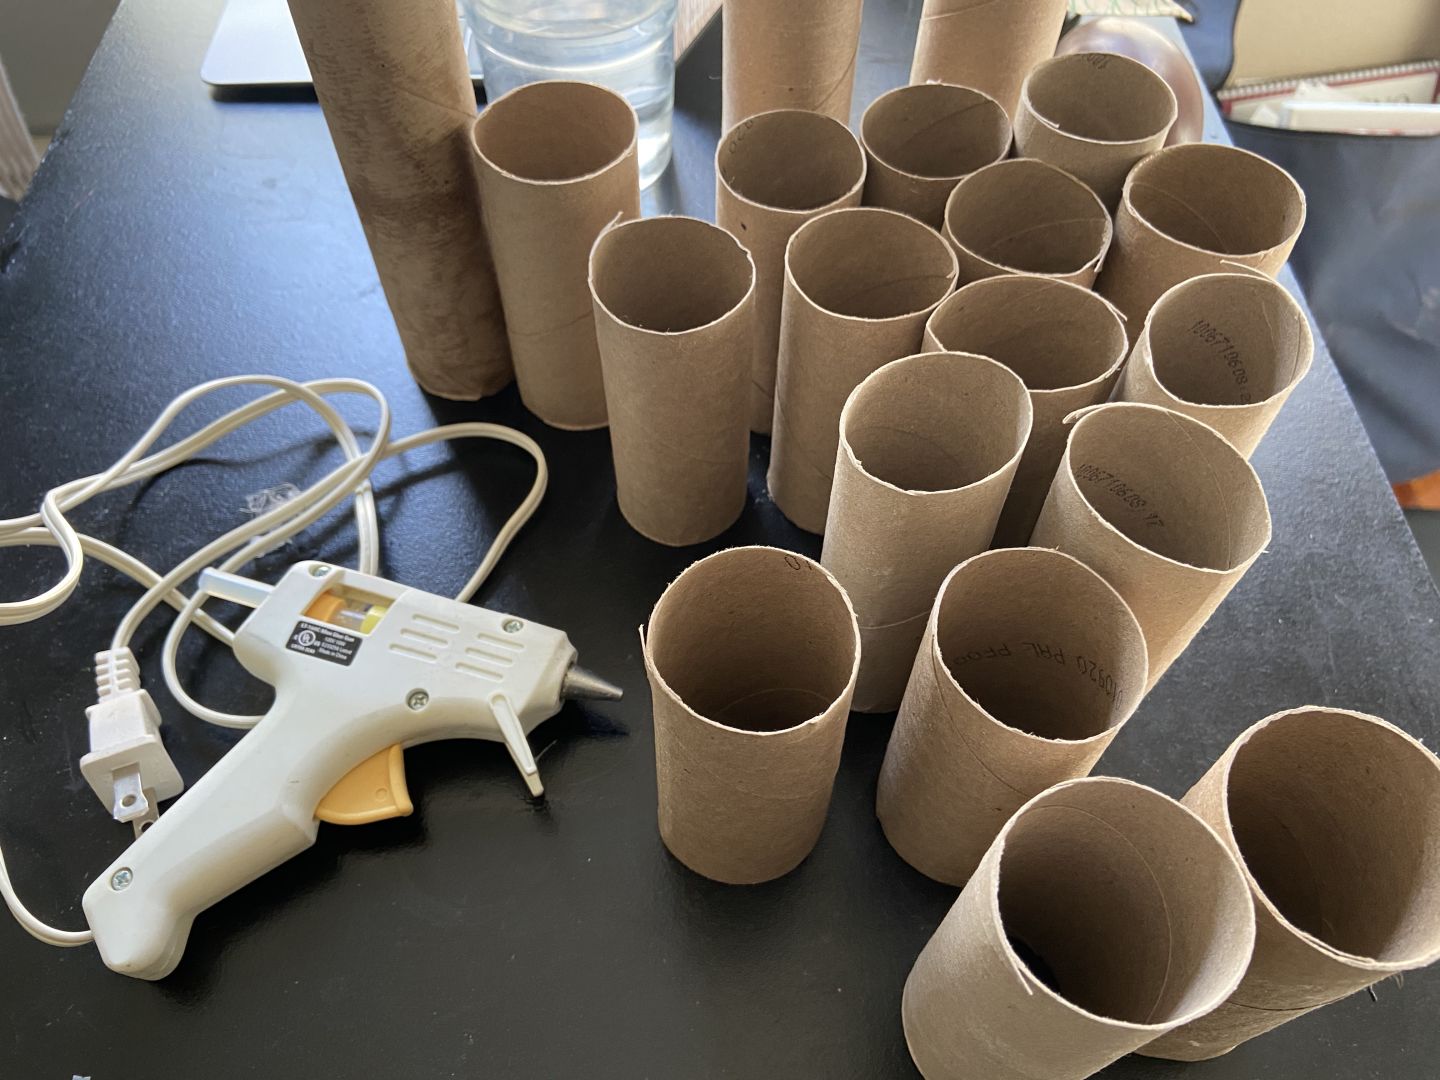 Assembling supplies - cardboard tubes and glue gun